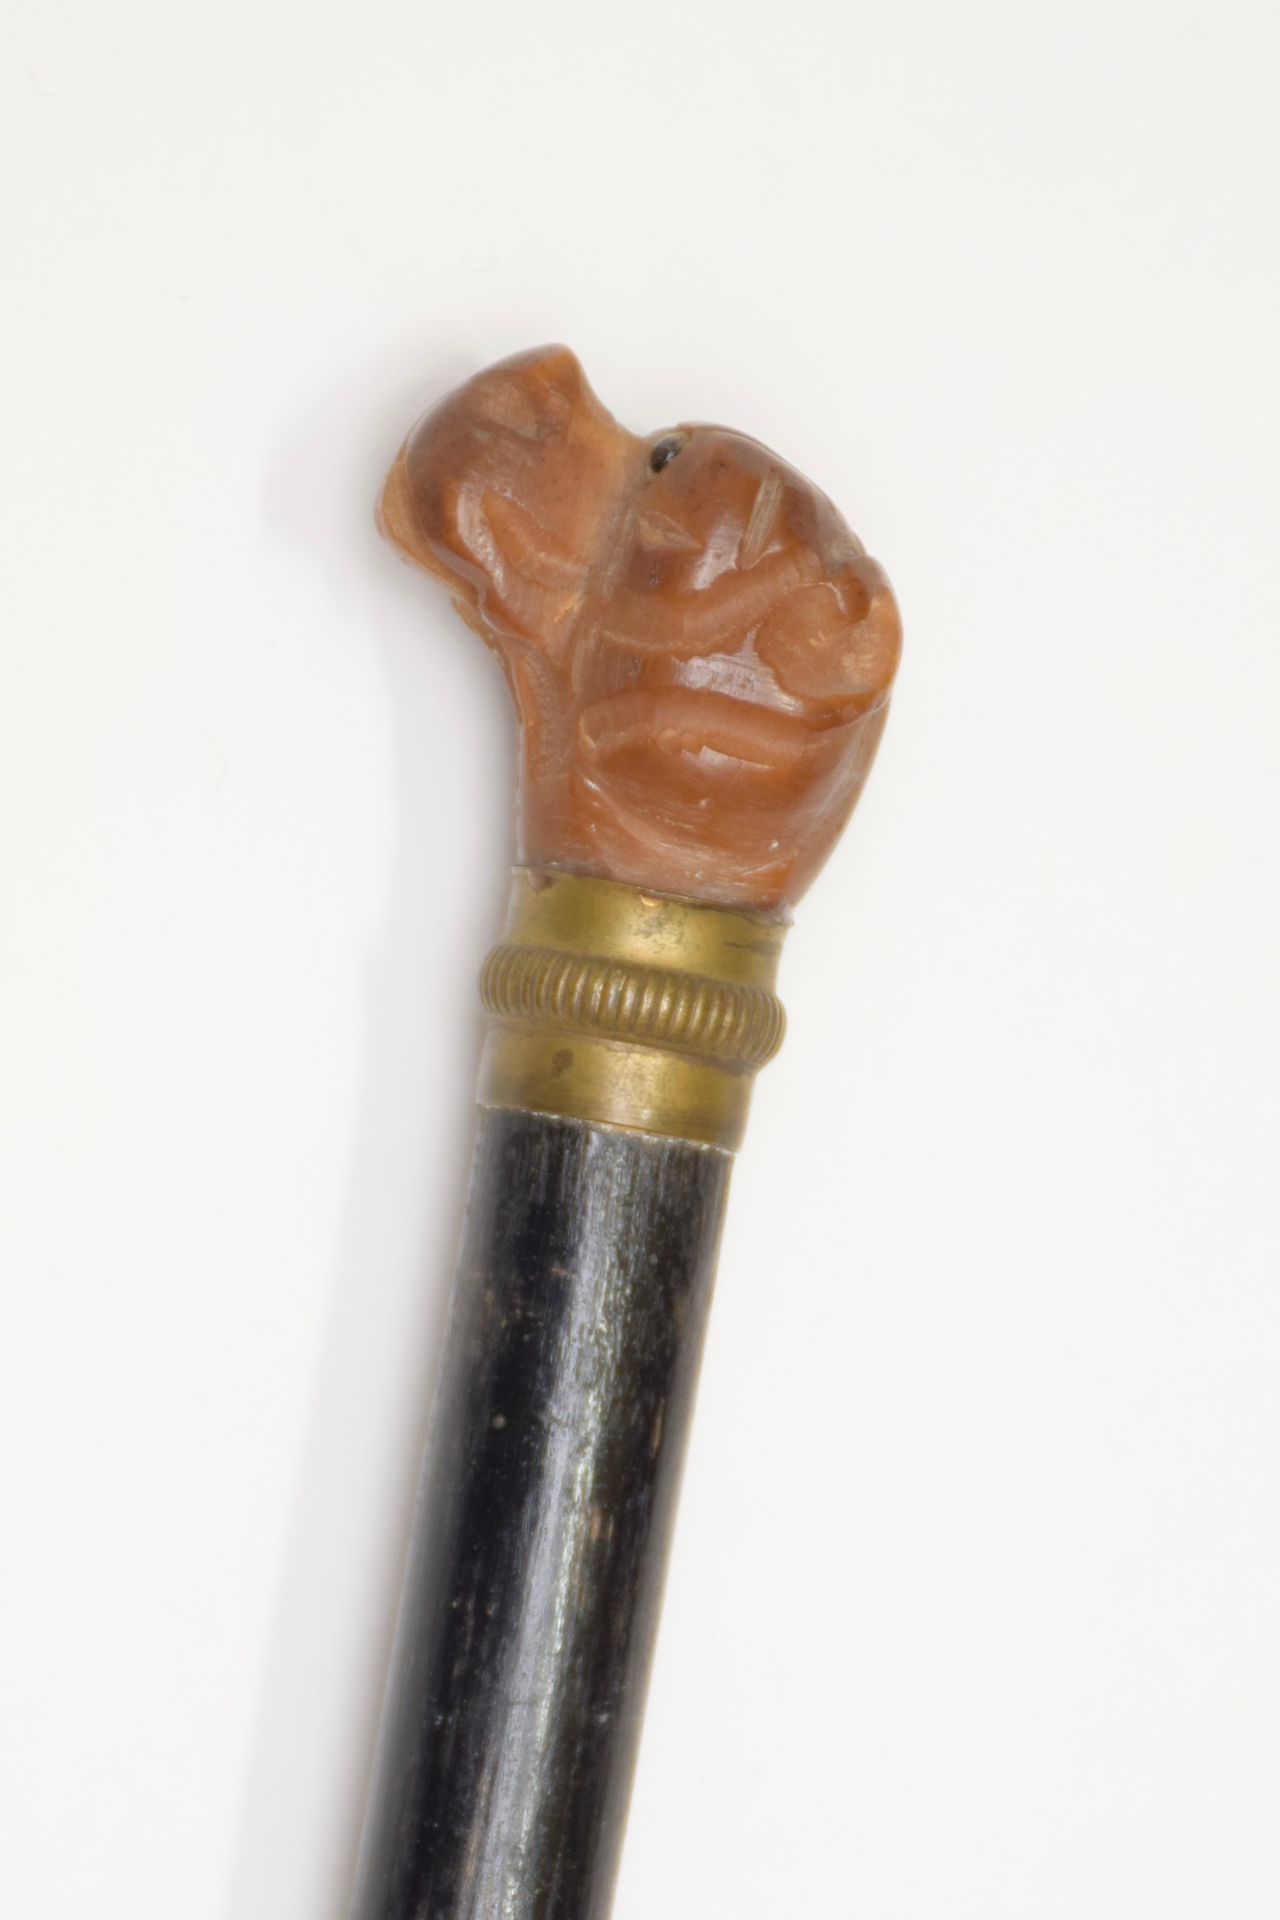 Null 带狗头钮的手杖

木头雕刻的。黄铜环，金属头

L : 82,5